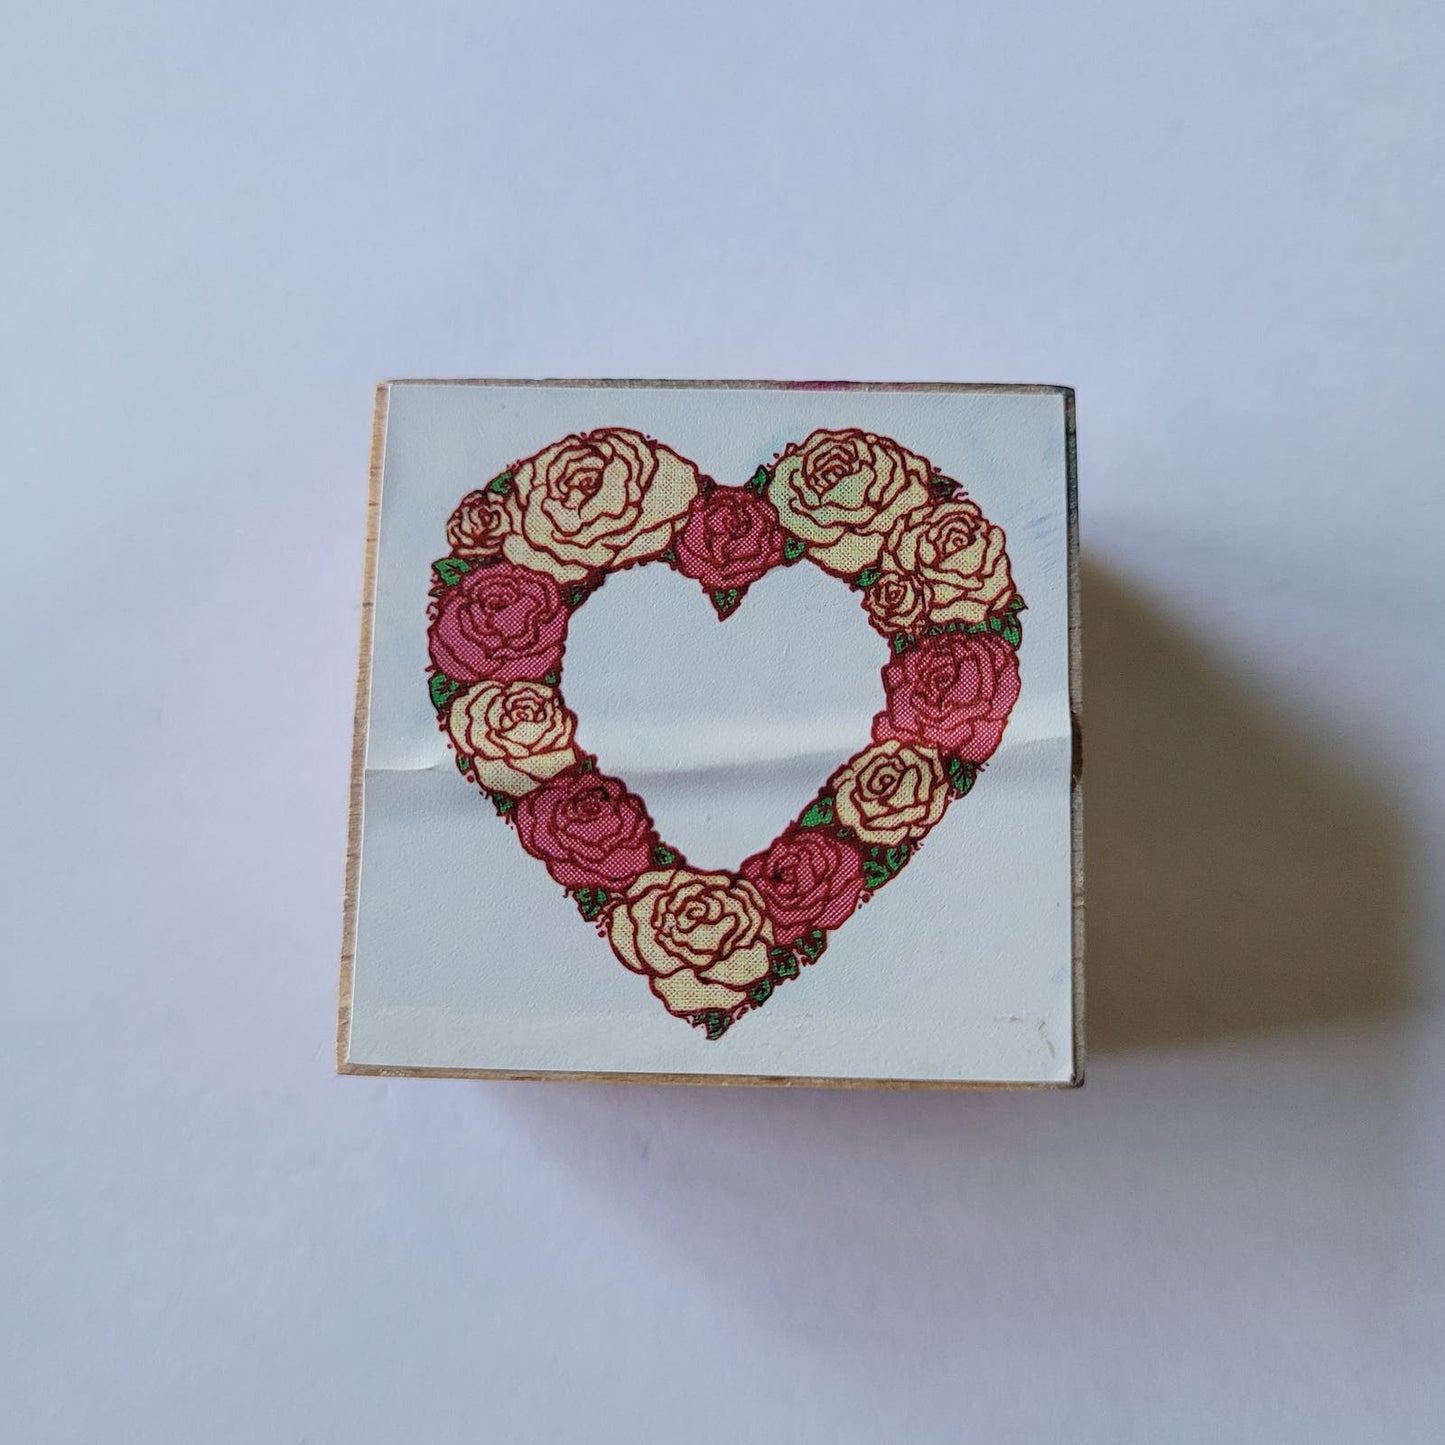 Vintage Rubber Stamp - Floral Heart Wreath